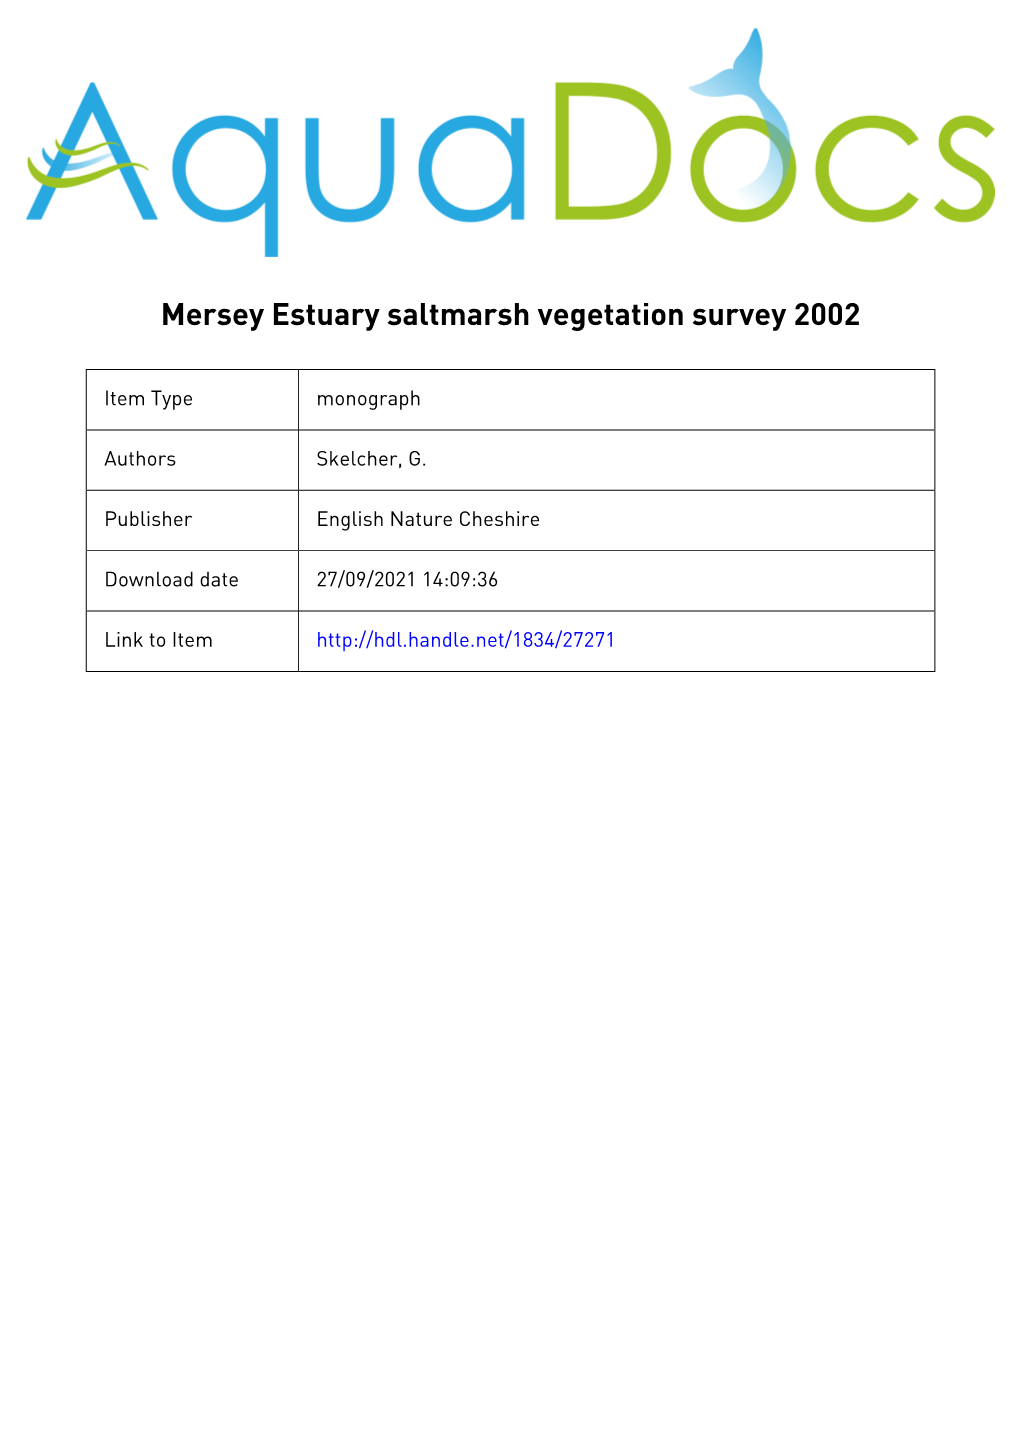 Mersey Estuary Saltmarsh Vegetation Survey 2002